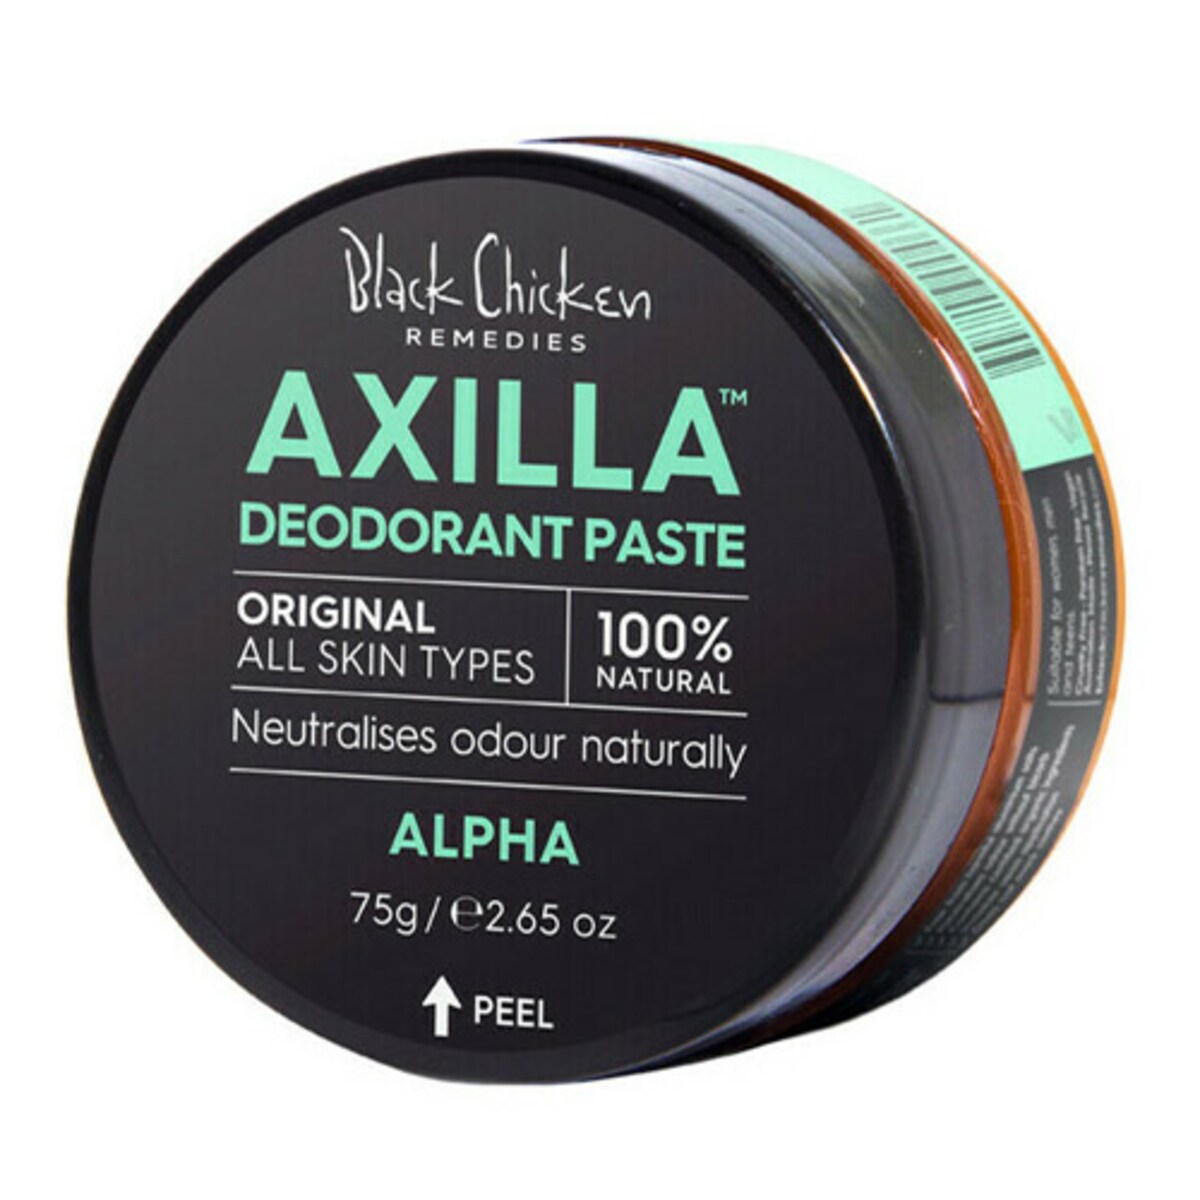 Black Chicken Remedies Axilla Natural Deodorant Paste Original Alpa 75g